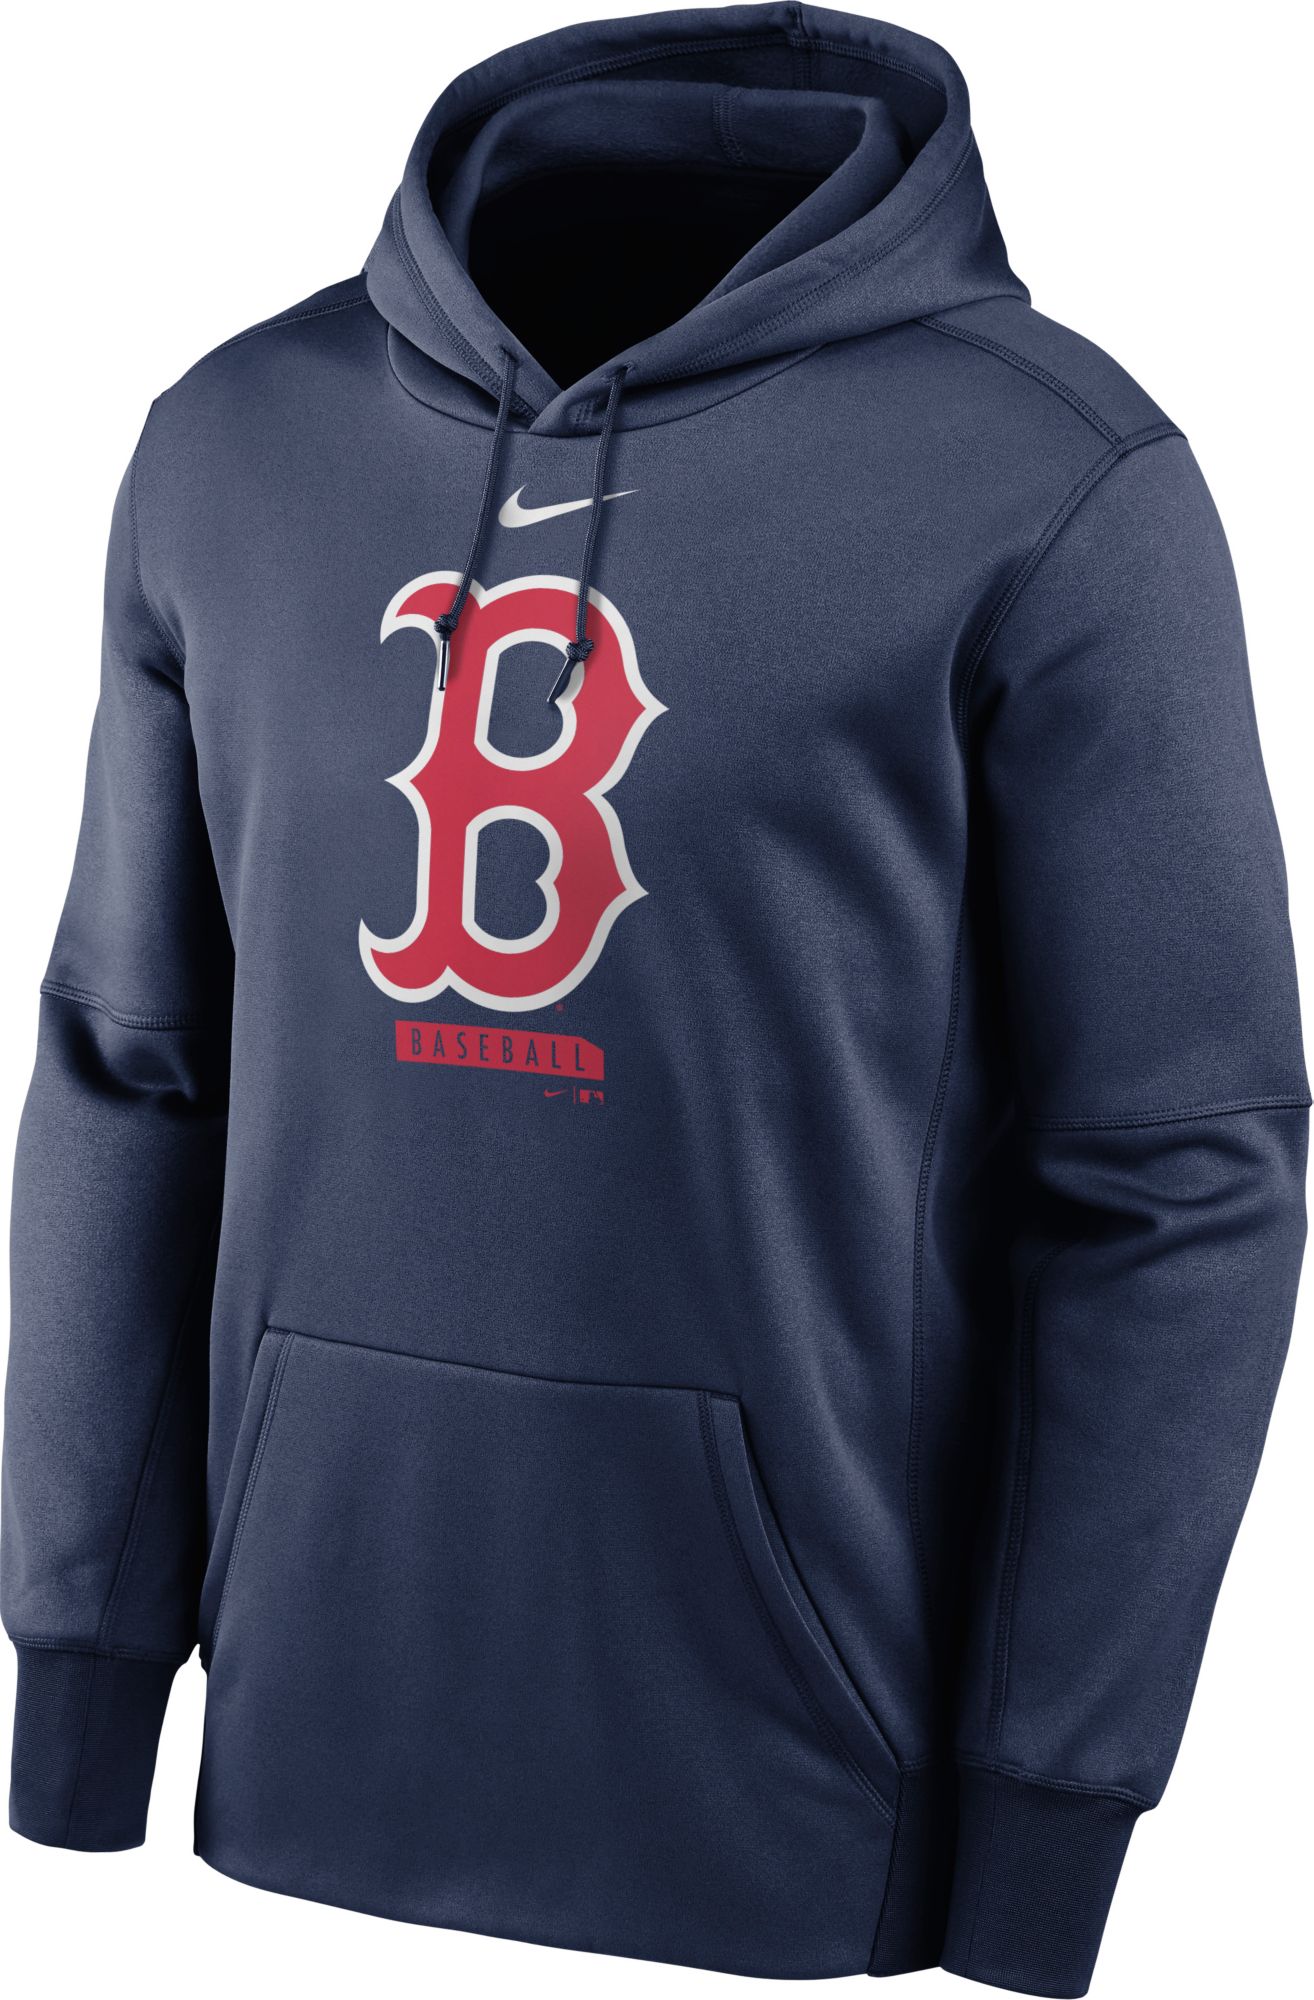 Nike / Men's Boston Red Sox Navy Therma-FIT Hoodie